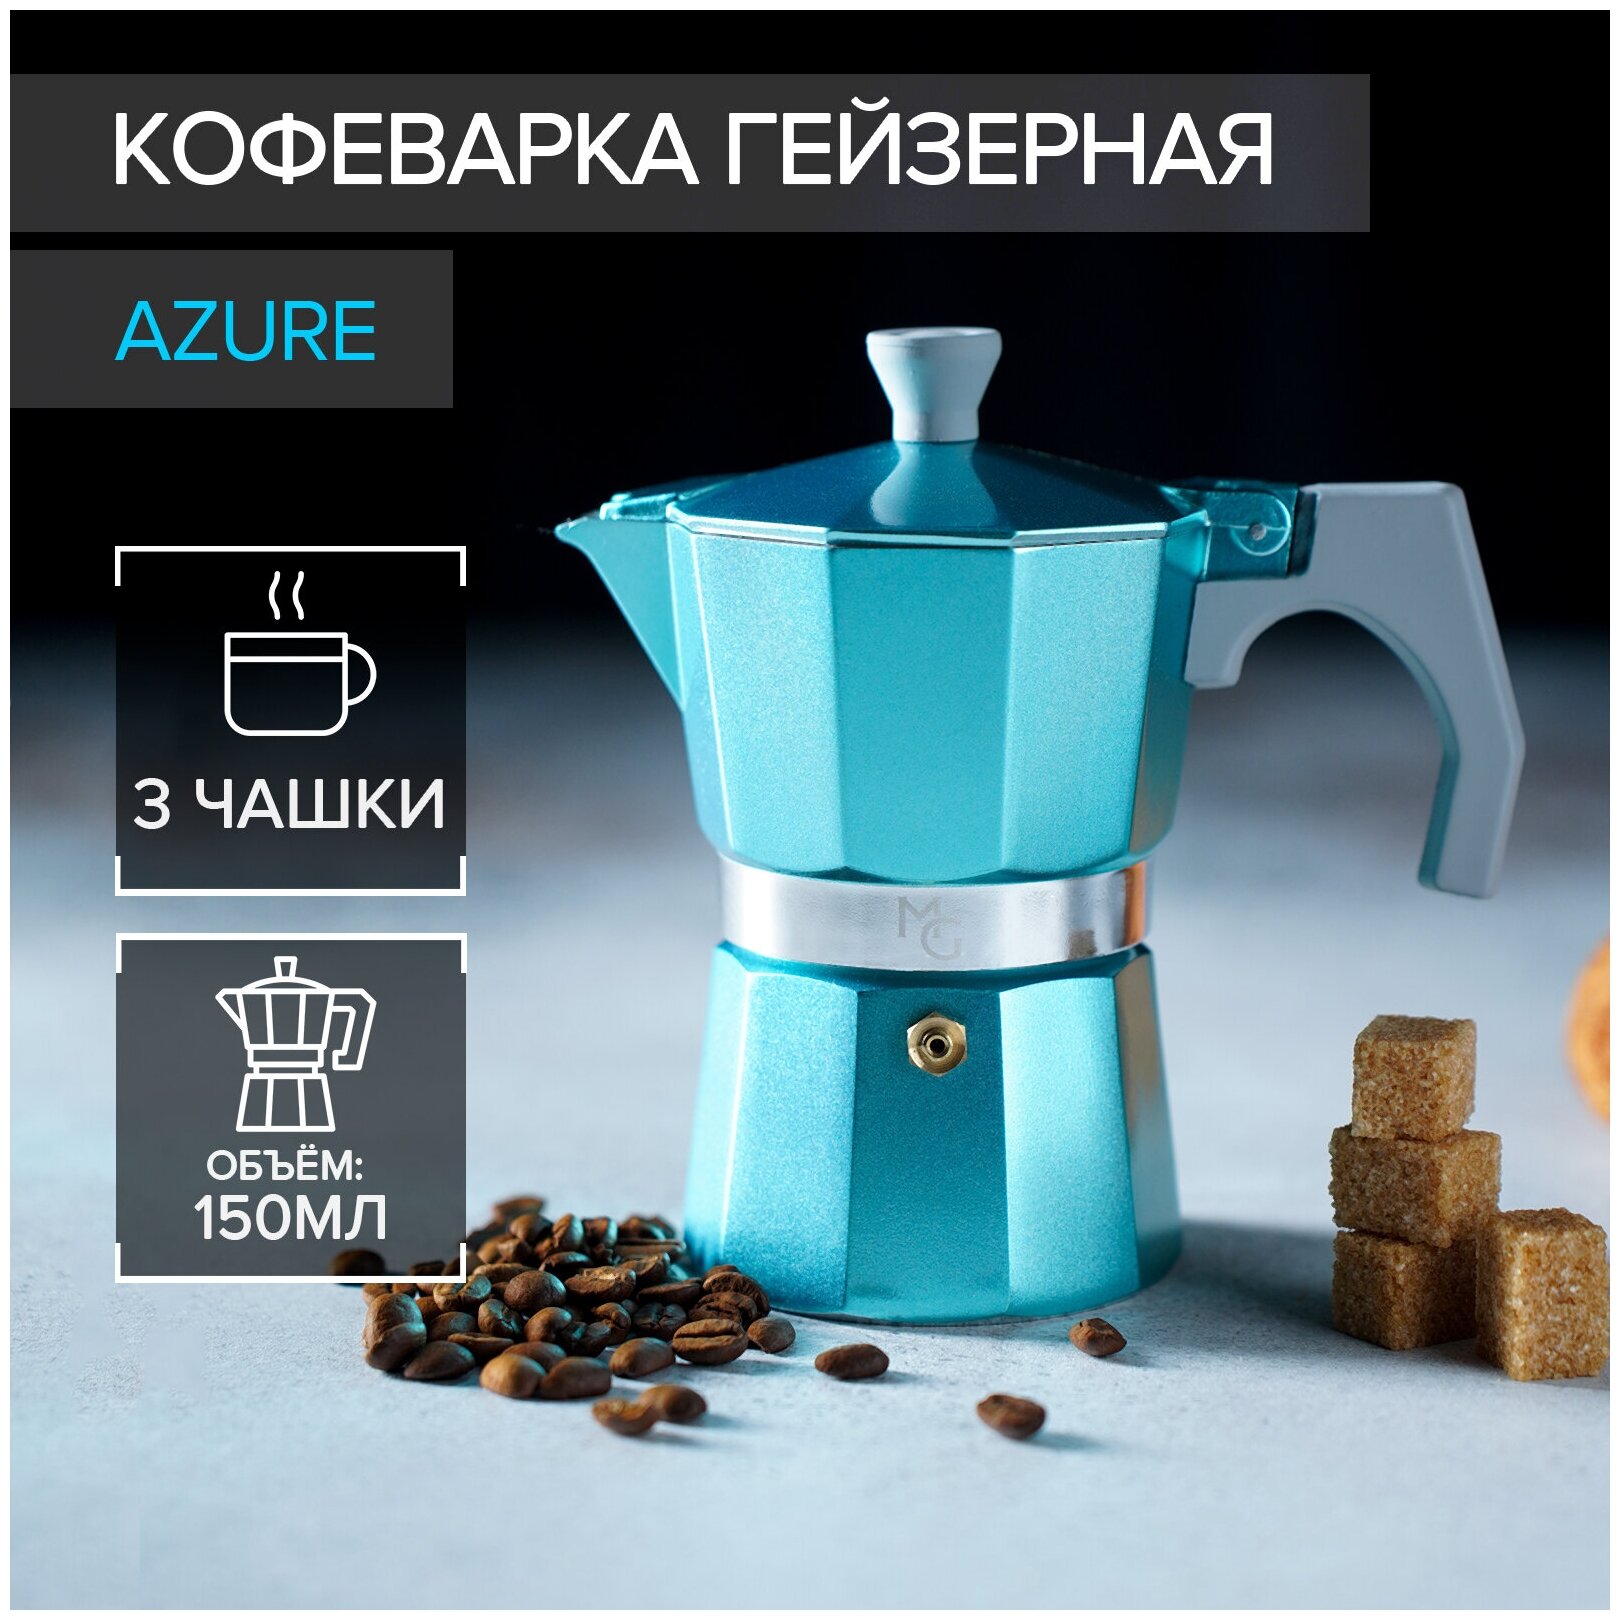 Кофеварка гейзерная Доляна Azure, на 3 чашки, 150 мл